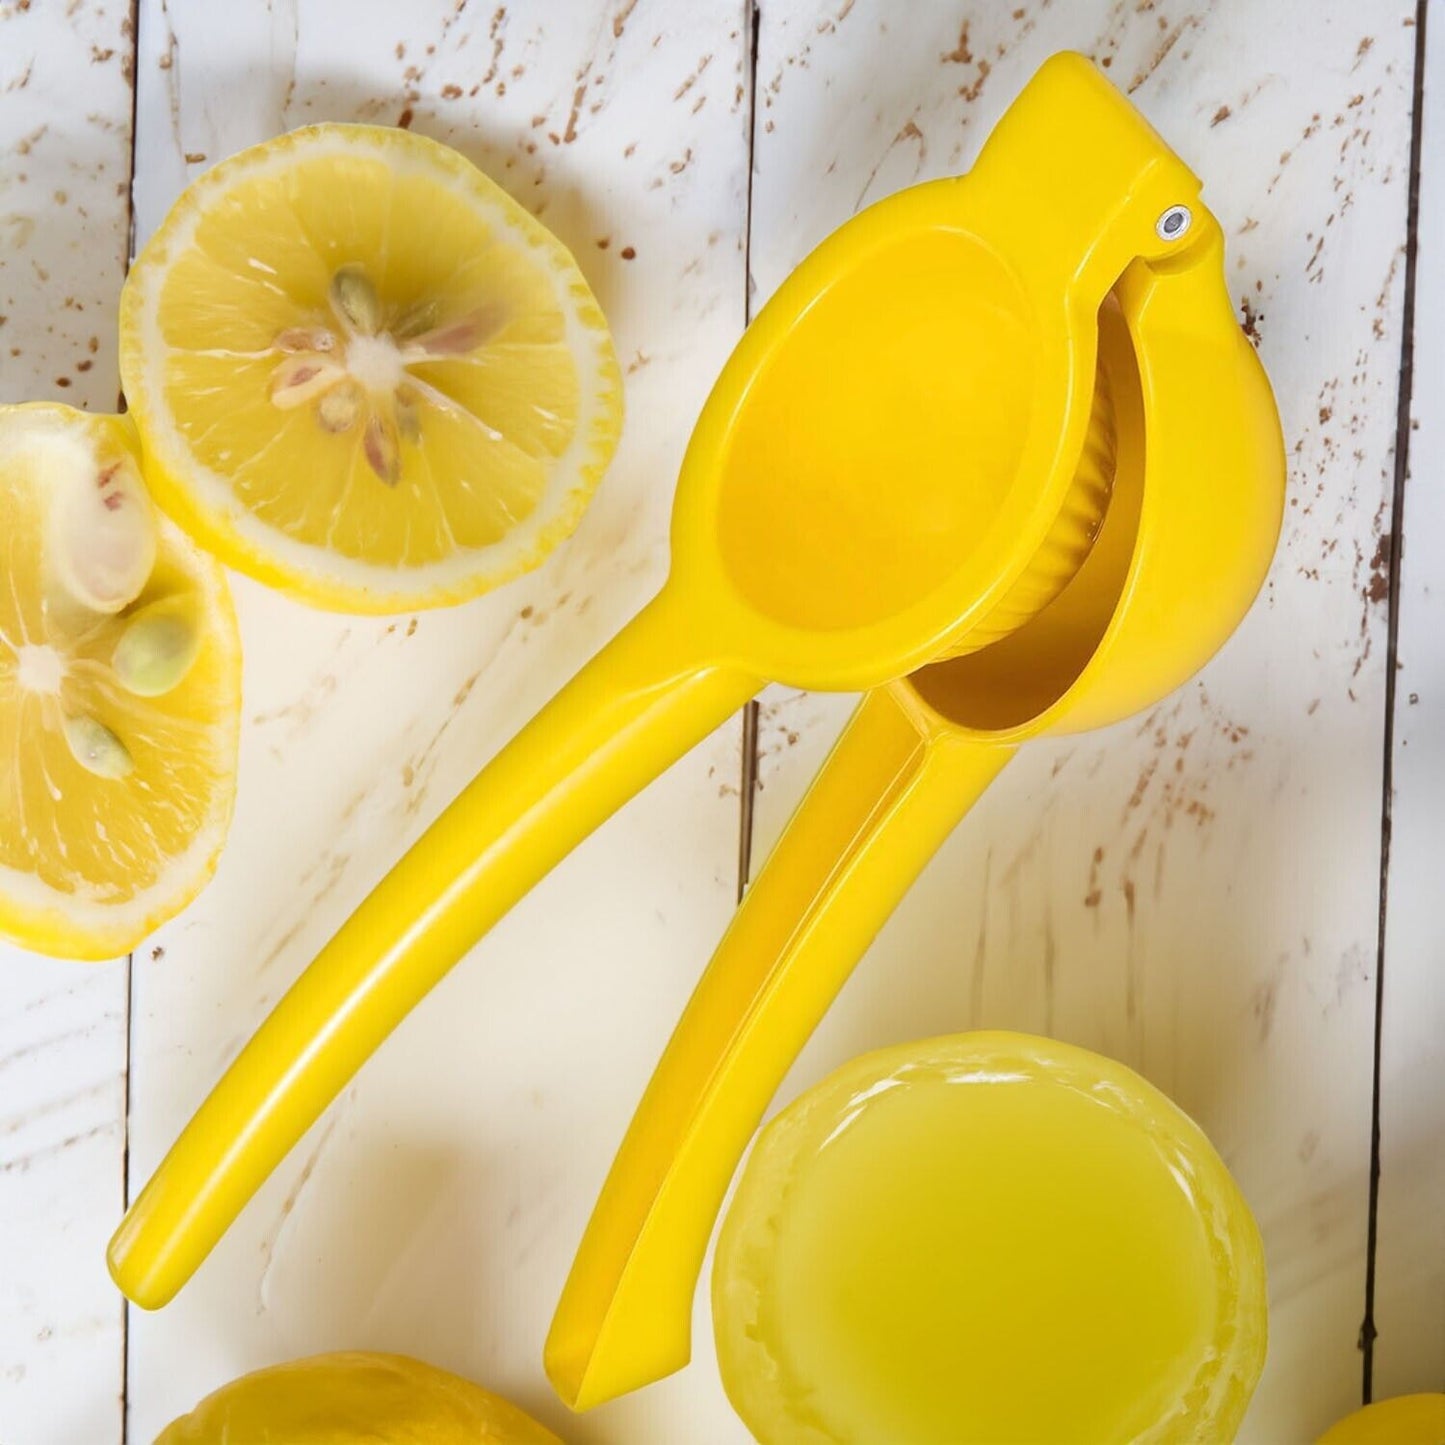 Metal Lemon Squeezer Juicer Lemon Orange Squeezer Citrus Juicer Press Tool